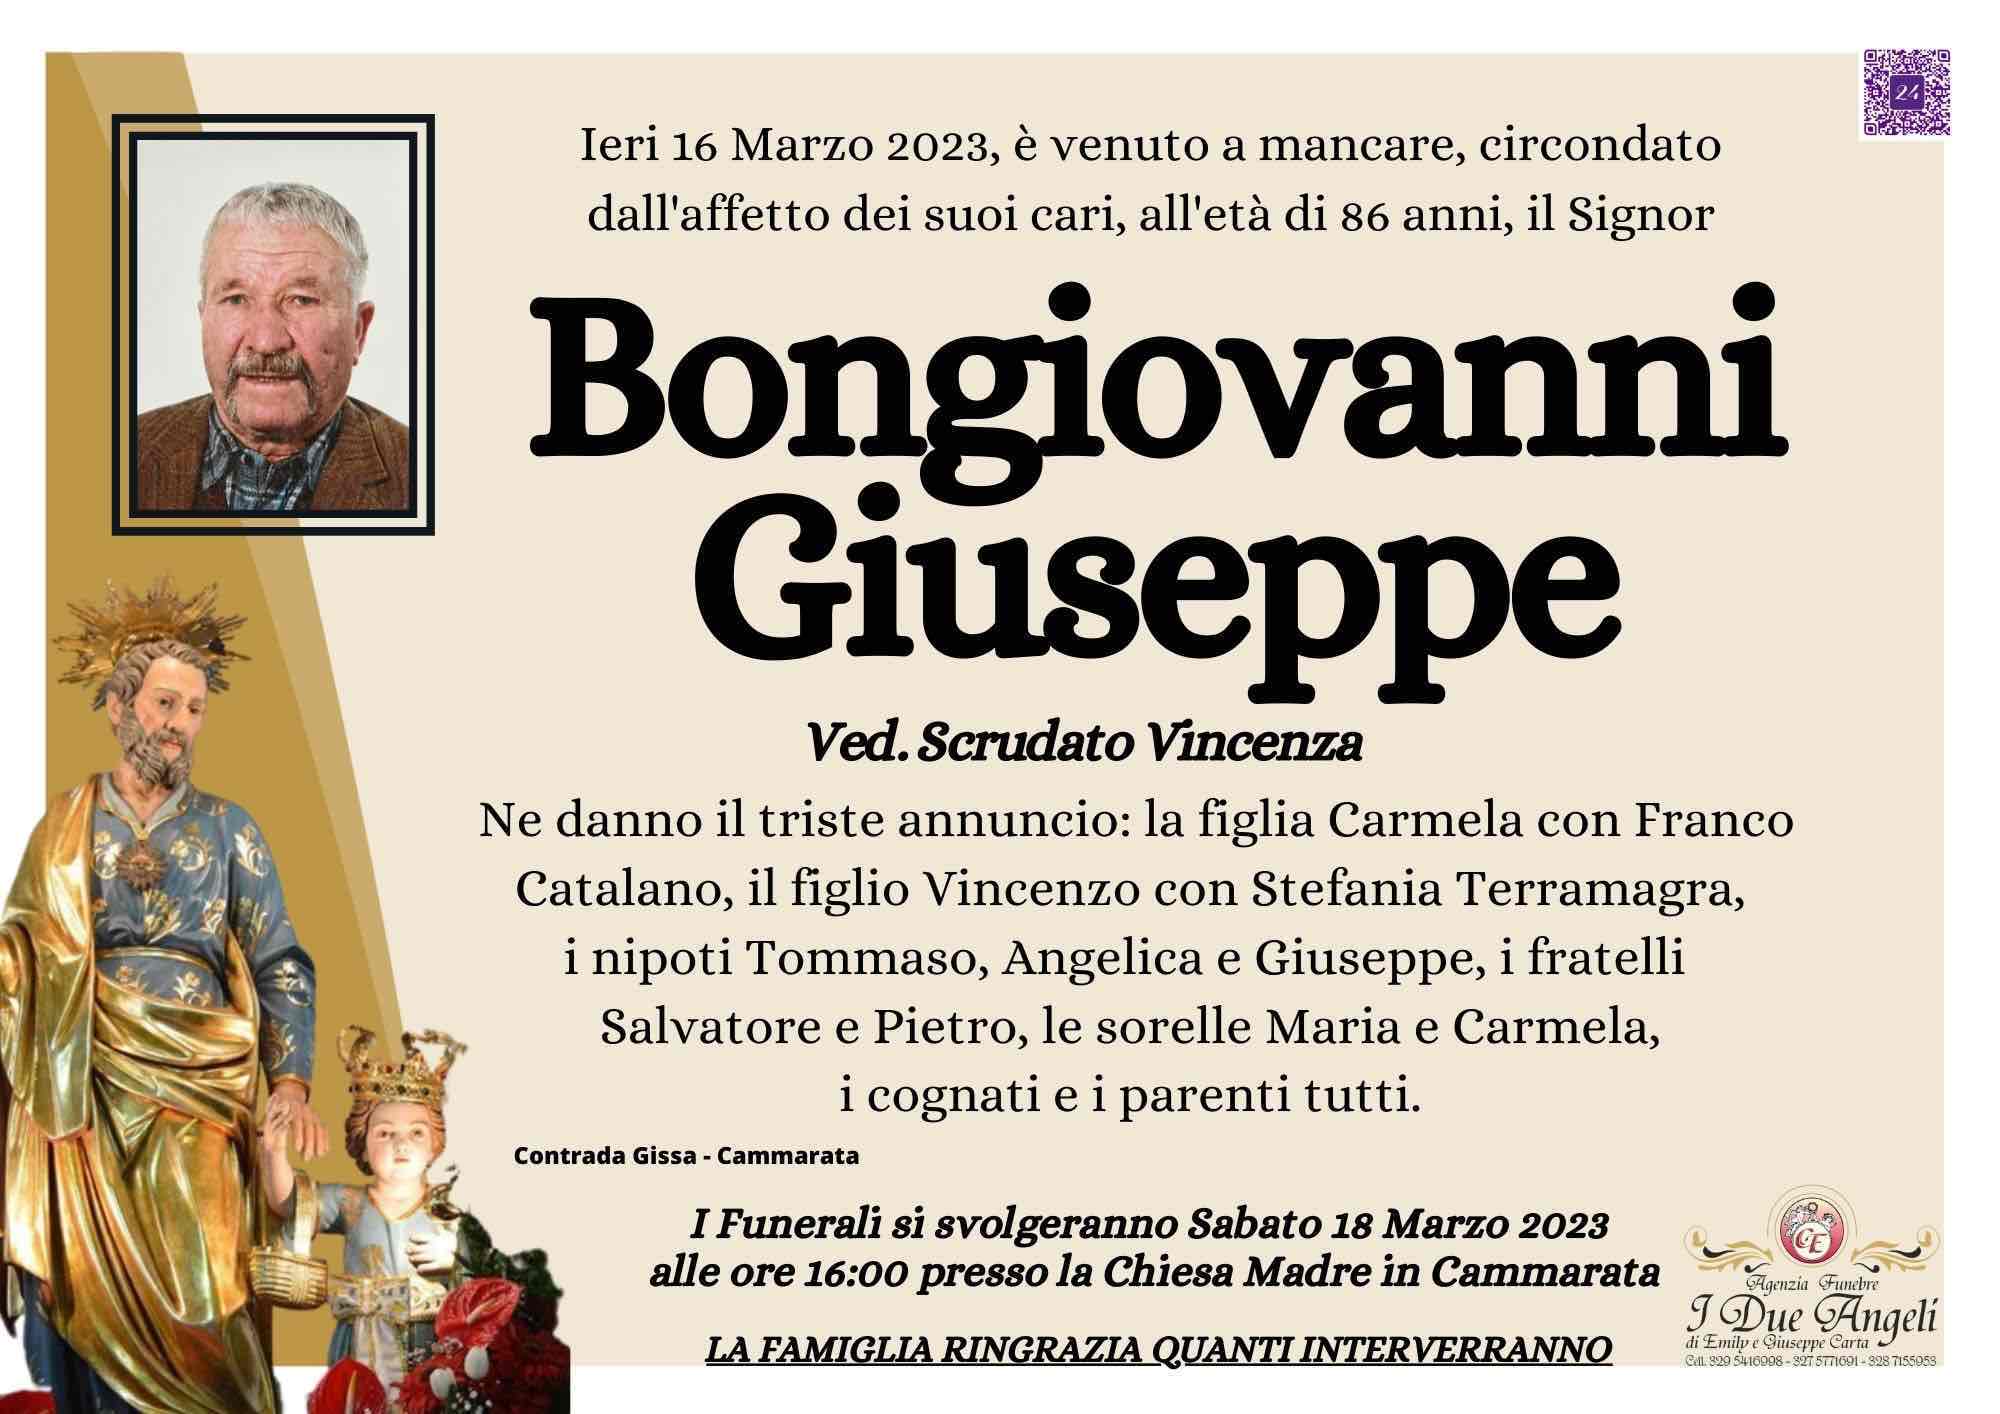 Giuseppe Bongiovanni